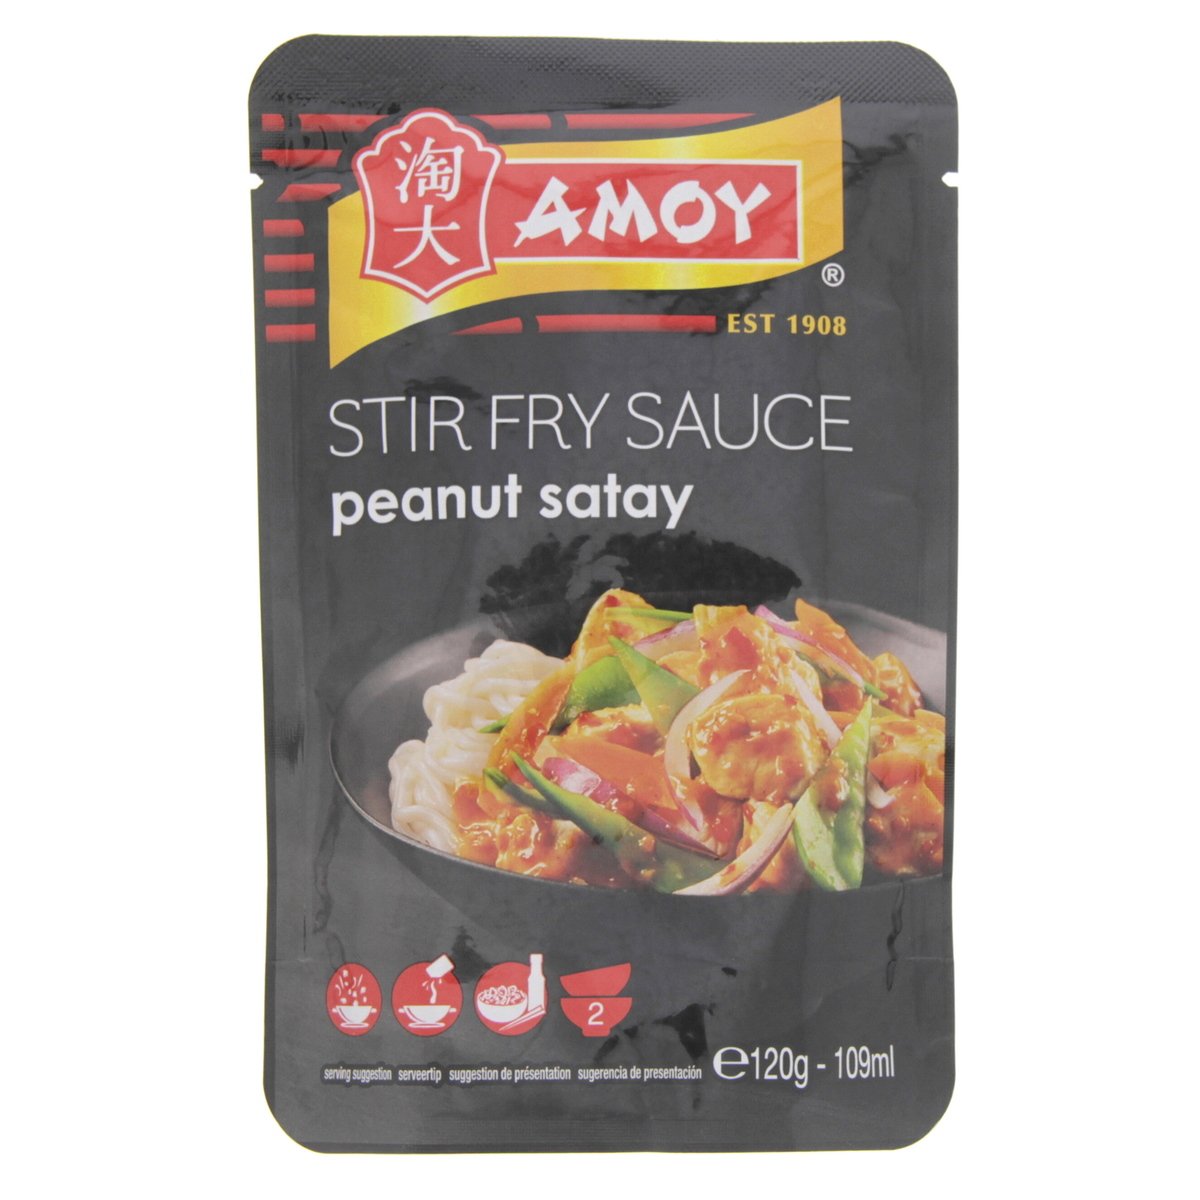 Amoy Stir Fry Sauce Peanut Satay 120 g